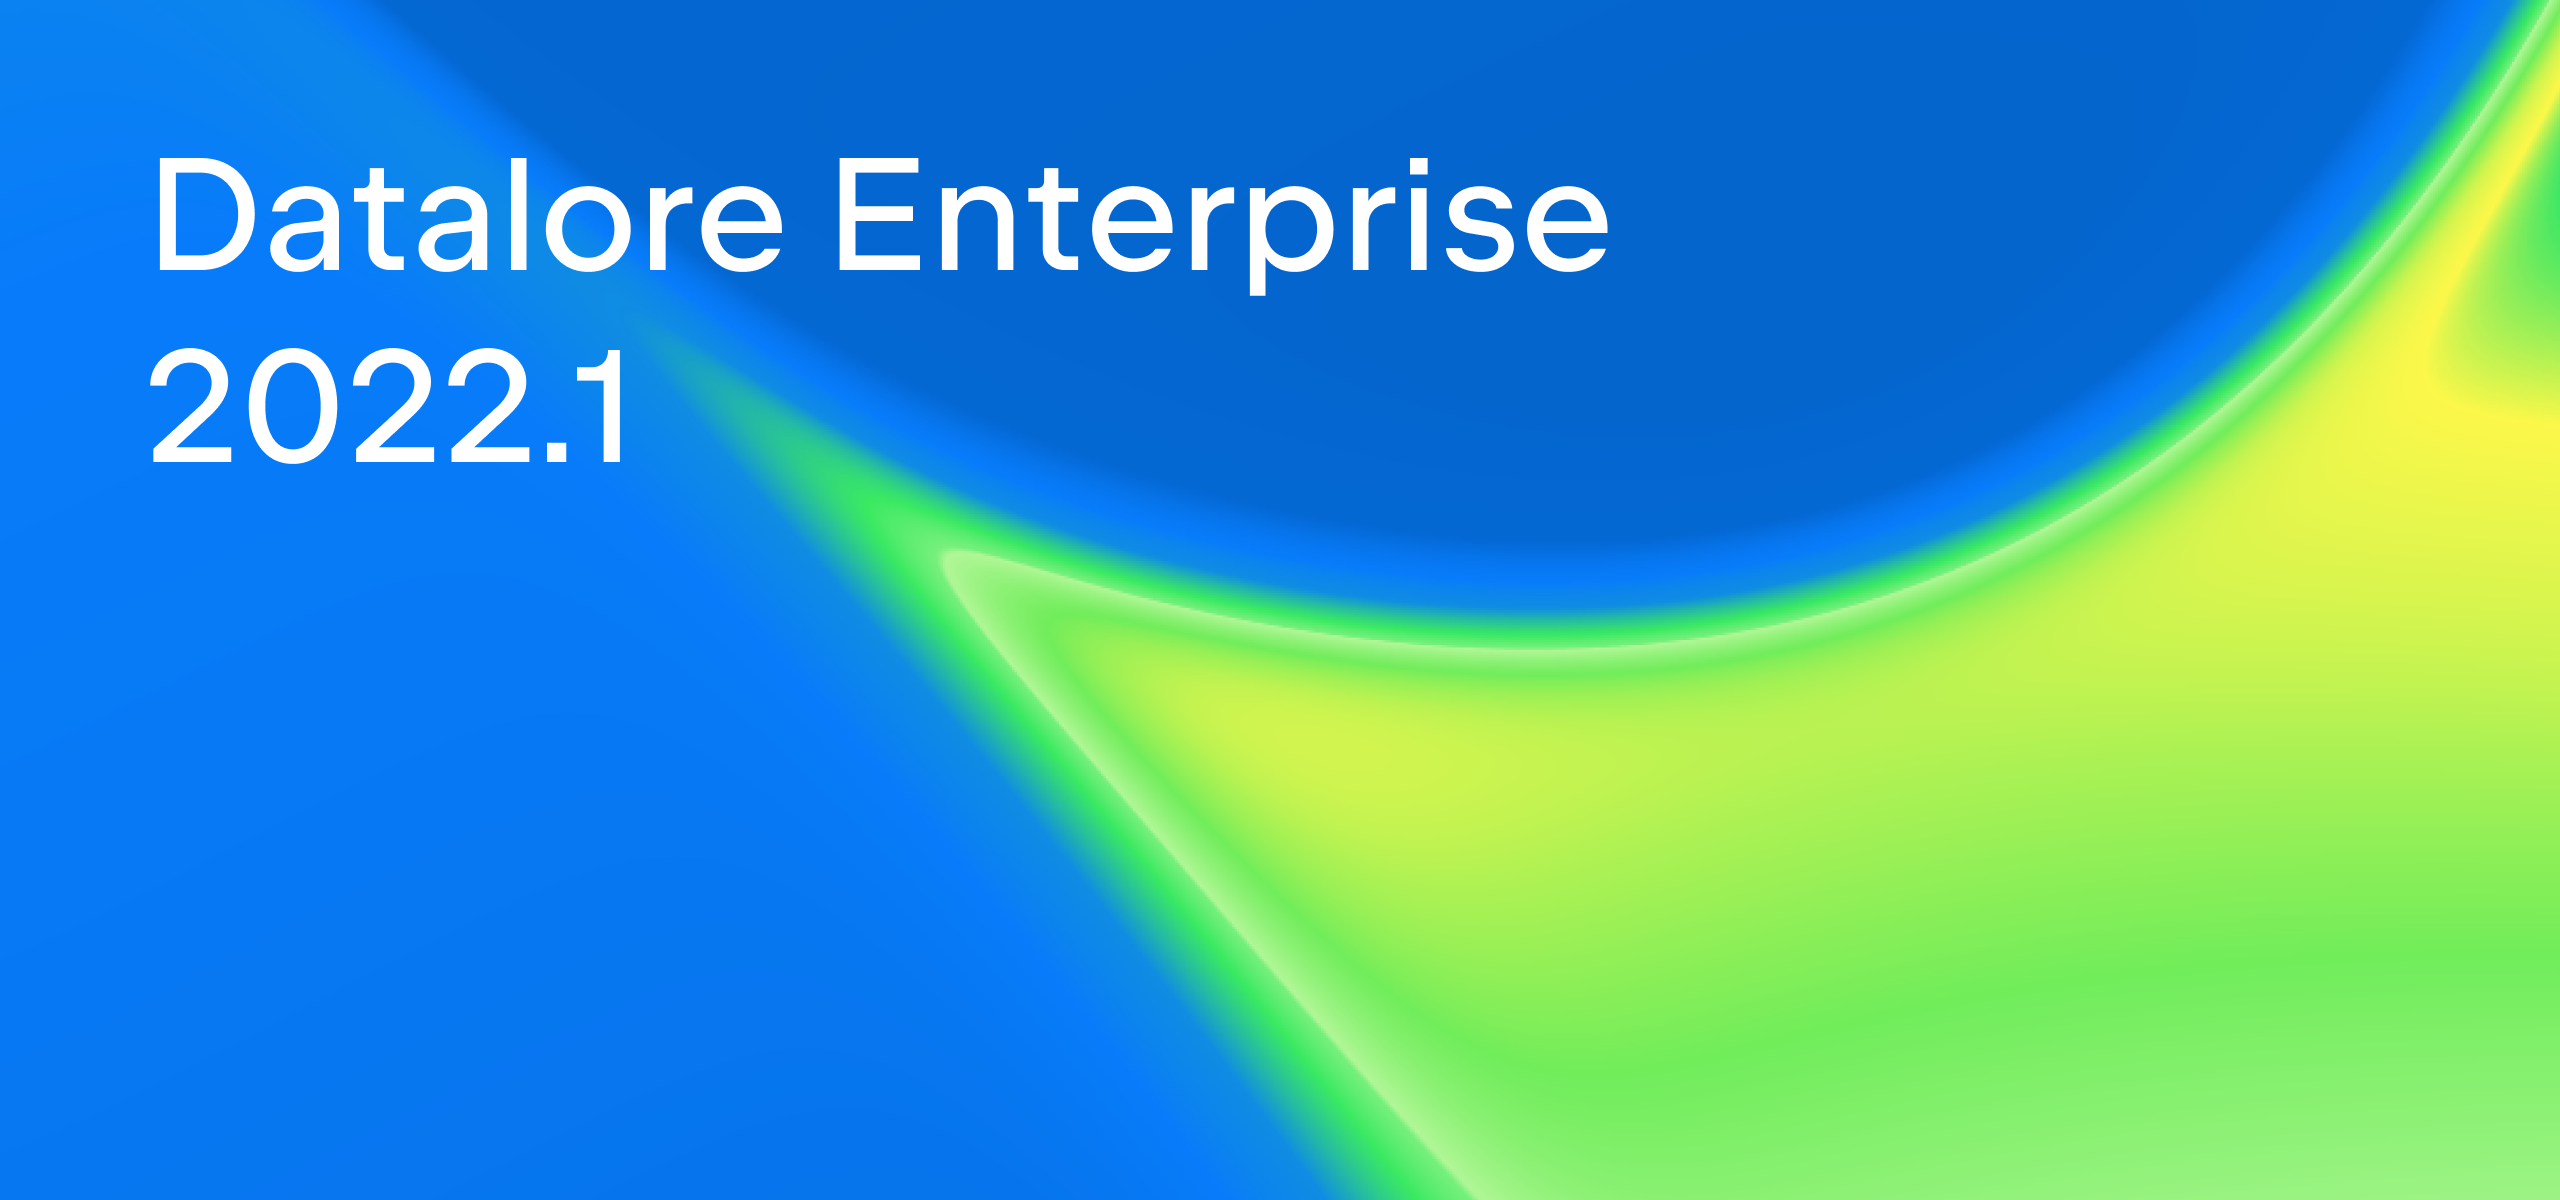 Datalore Enterprise 2022.1 Release